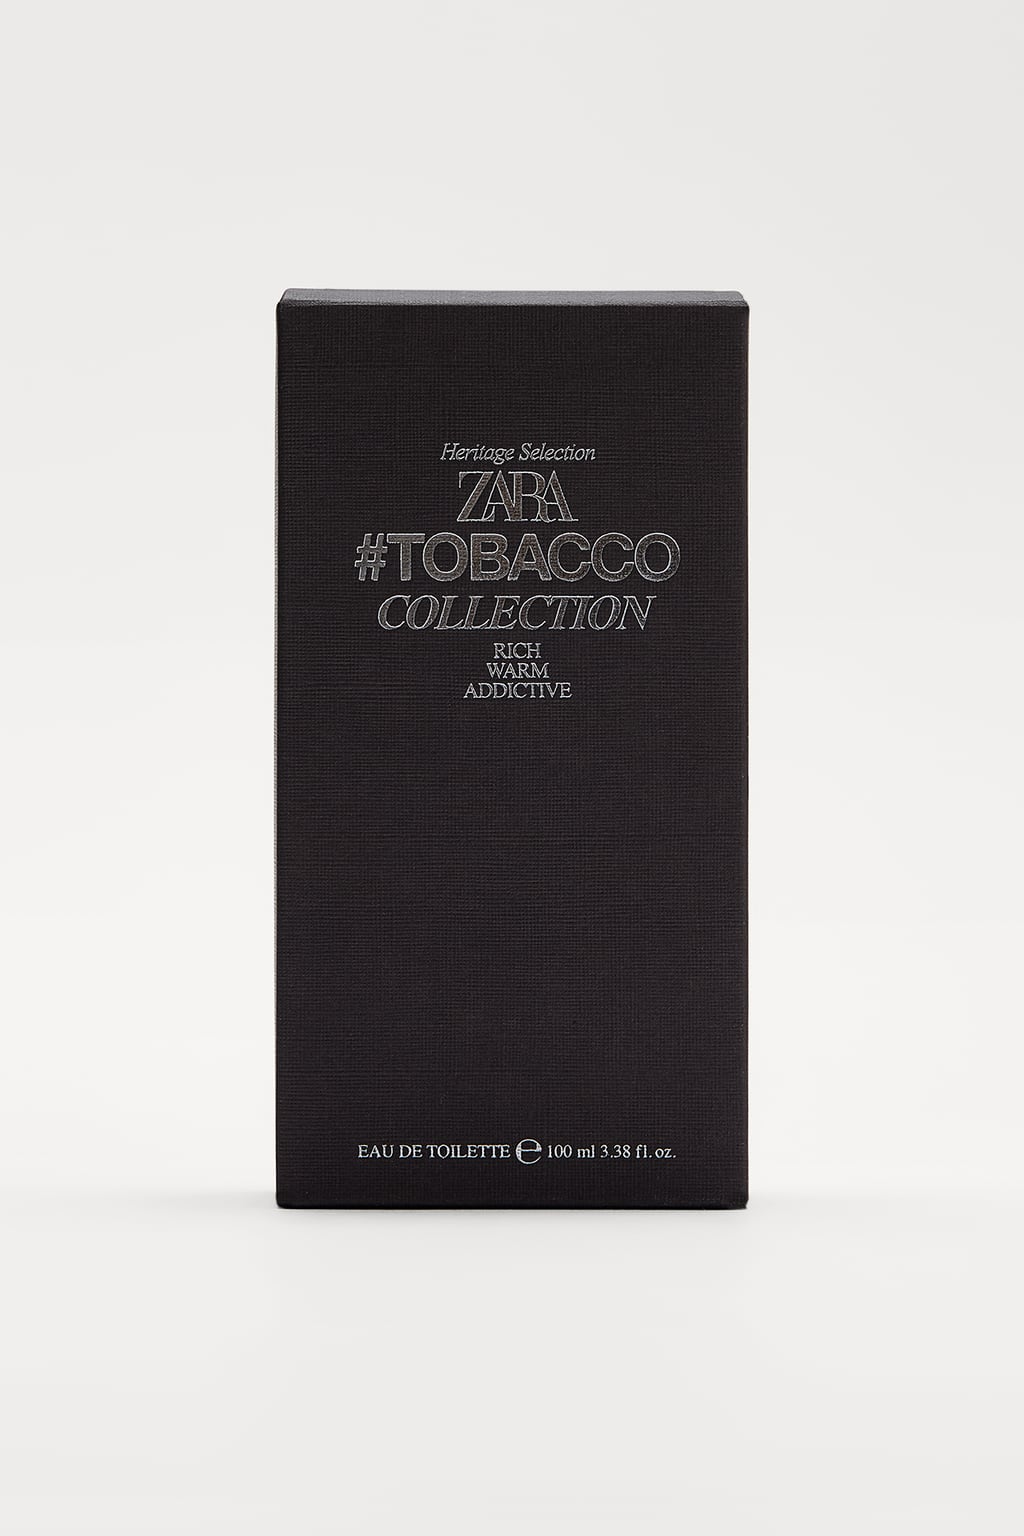  Zara Men's TOBACCO COLLECTION Rich/Warm/Addictive